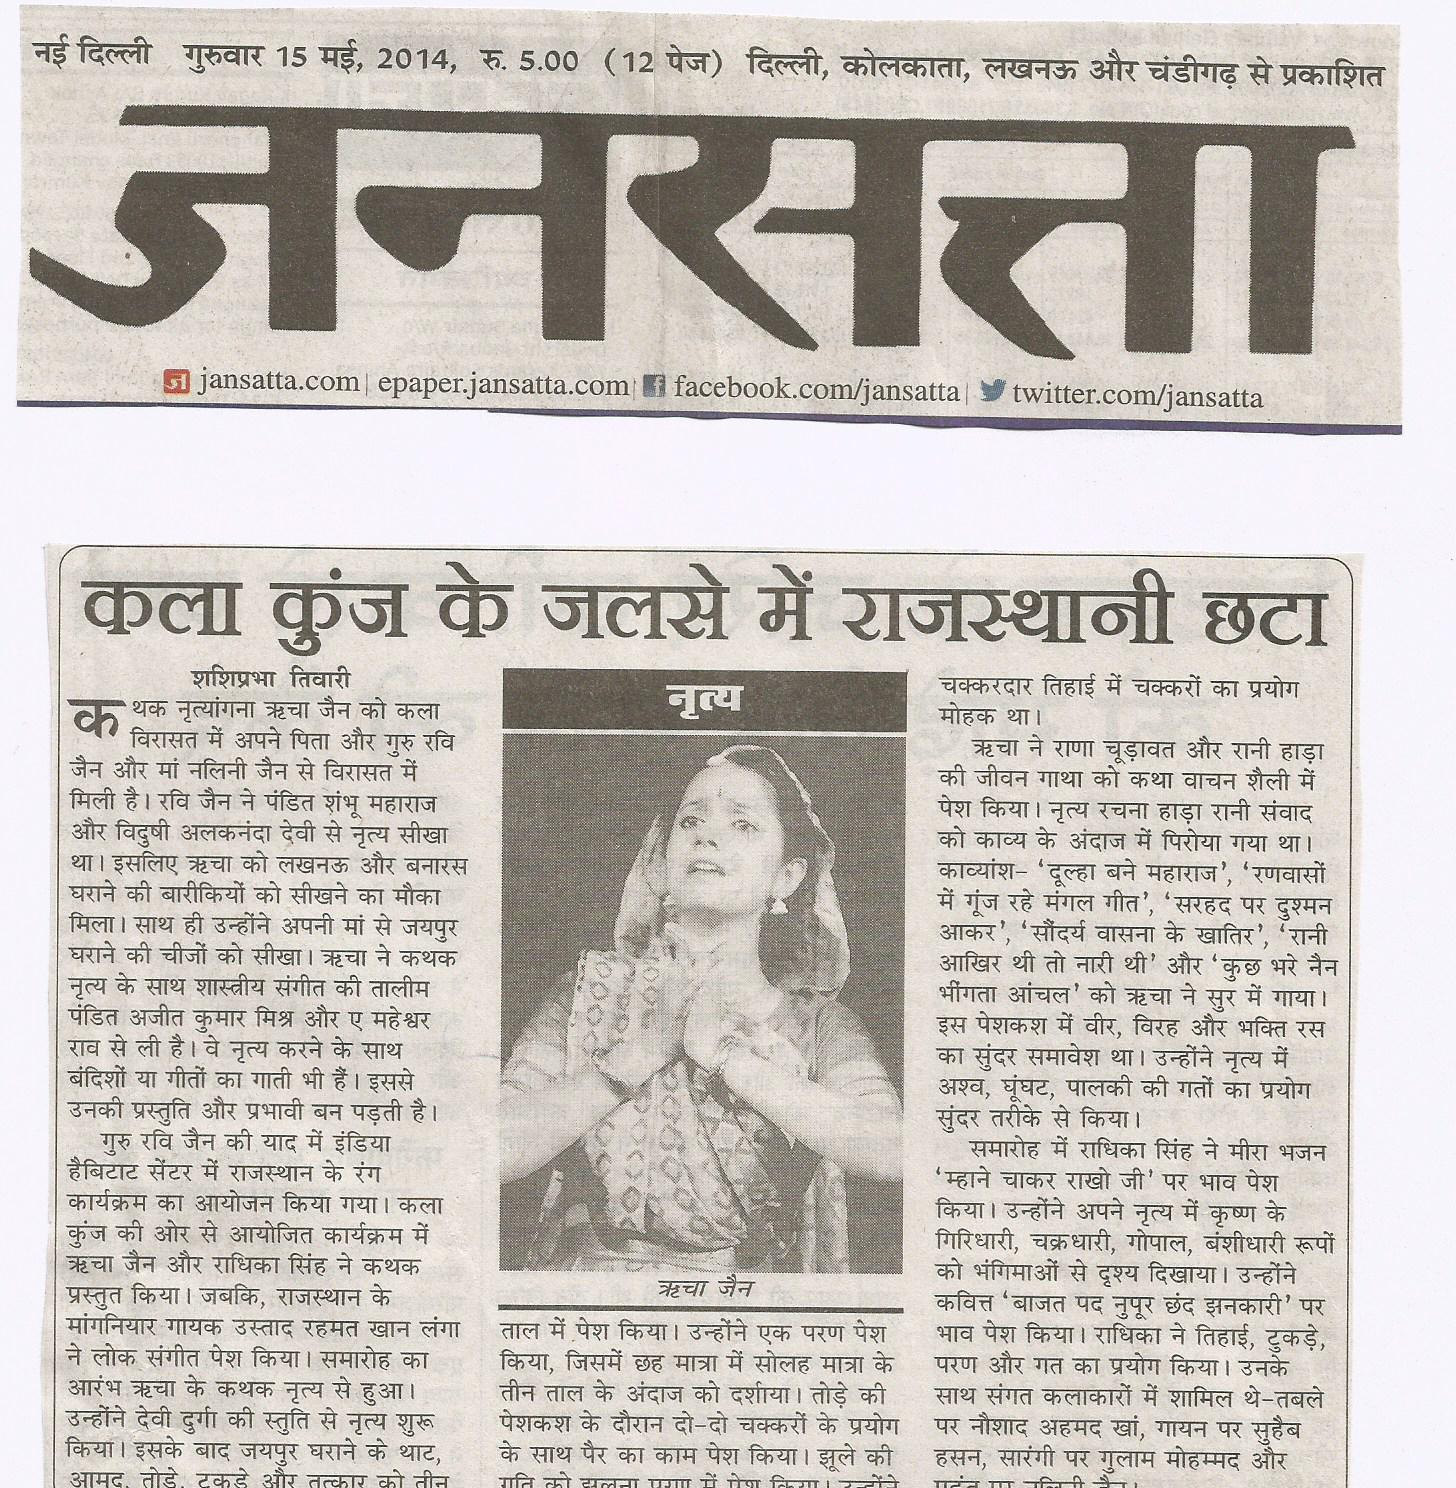 Jansatta by Critic Shashi Prabha Tiwari Ji, 15th May, 2014